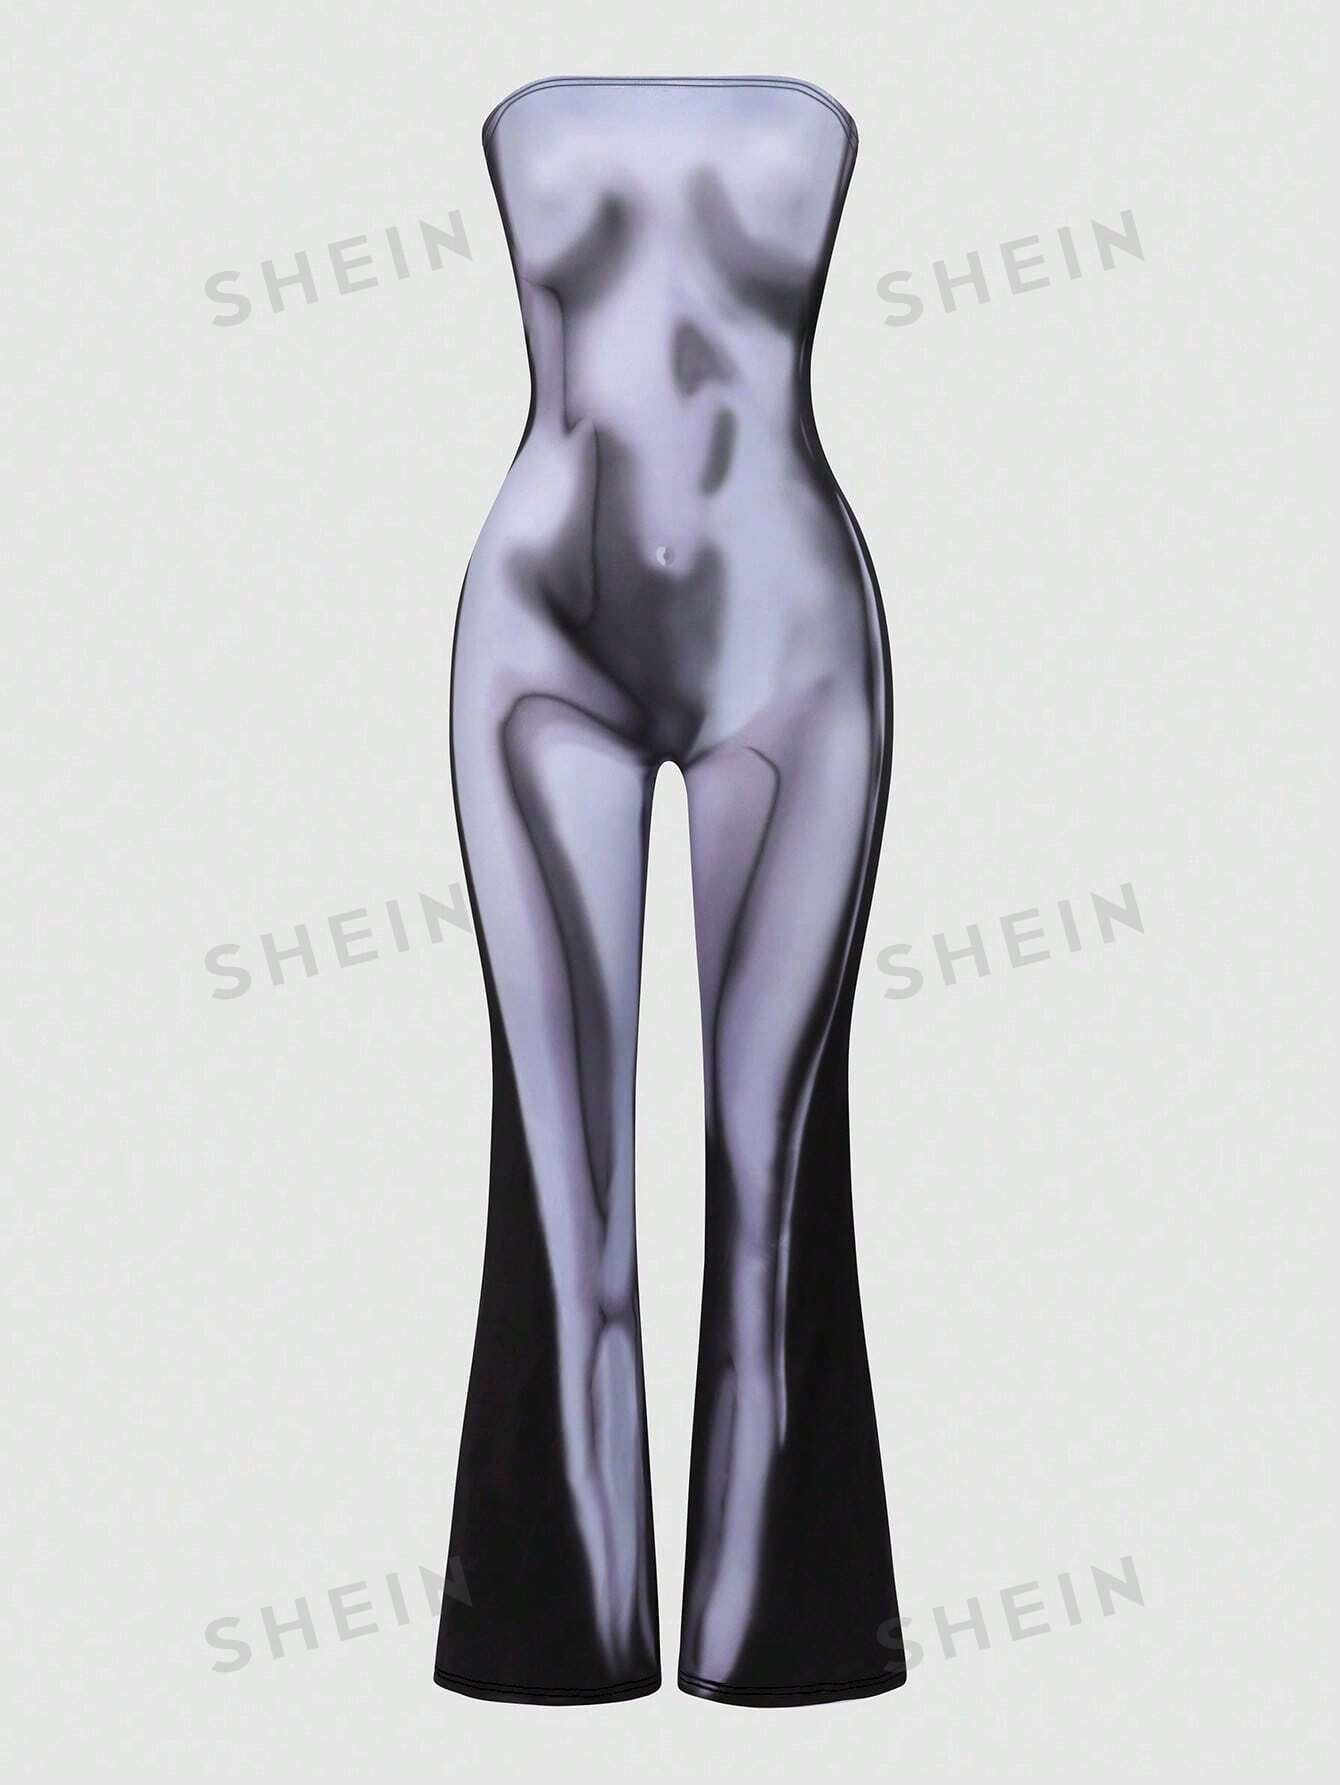 SHEIN ICON Женский комбинезон-бандо с принтом, облегающий крой, многоцветный shein icon женский комбинезон бандо с принтом облегающий крой многоцветный